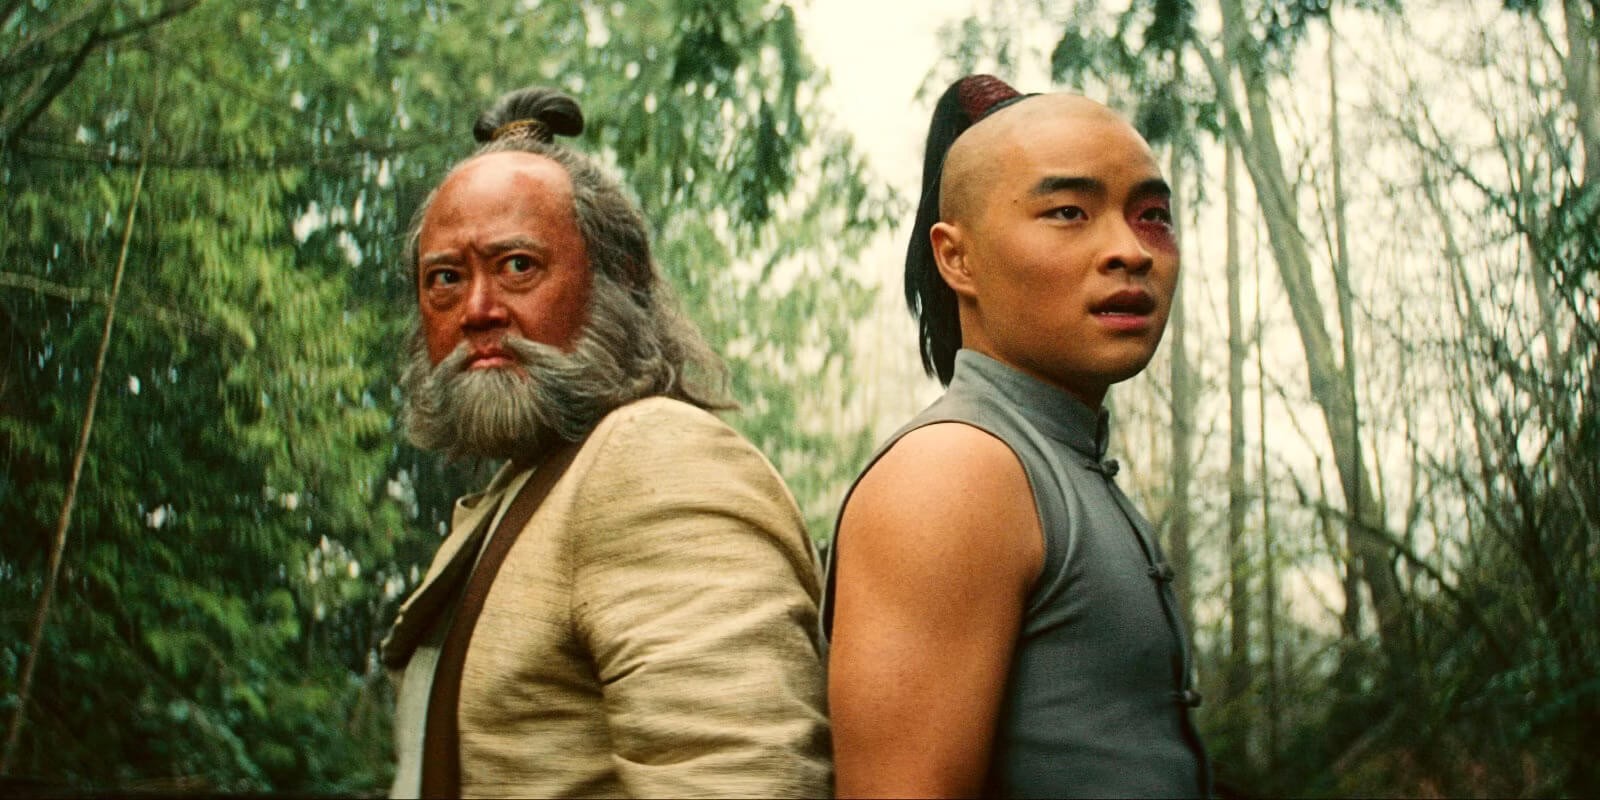 Iroh and Zuko in Avatar: The Last Airbender